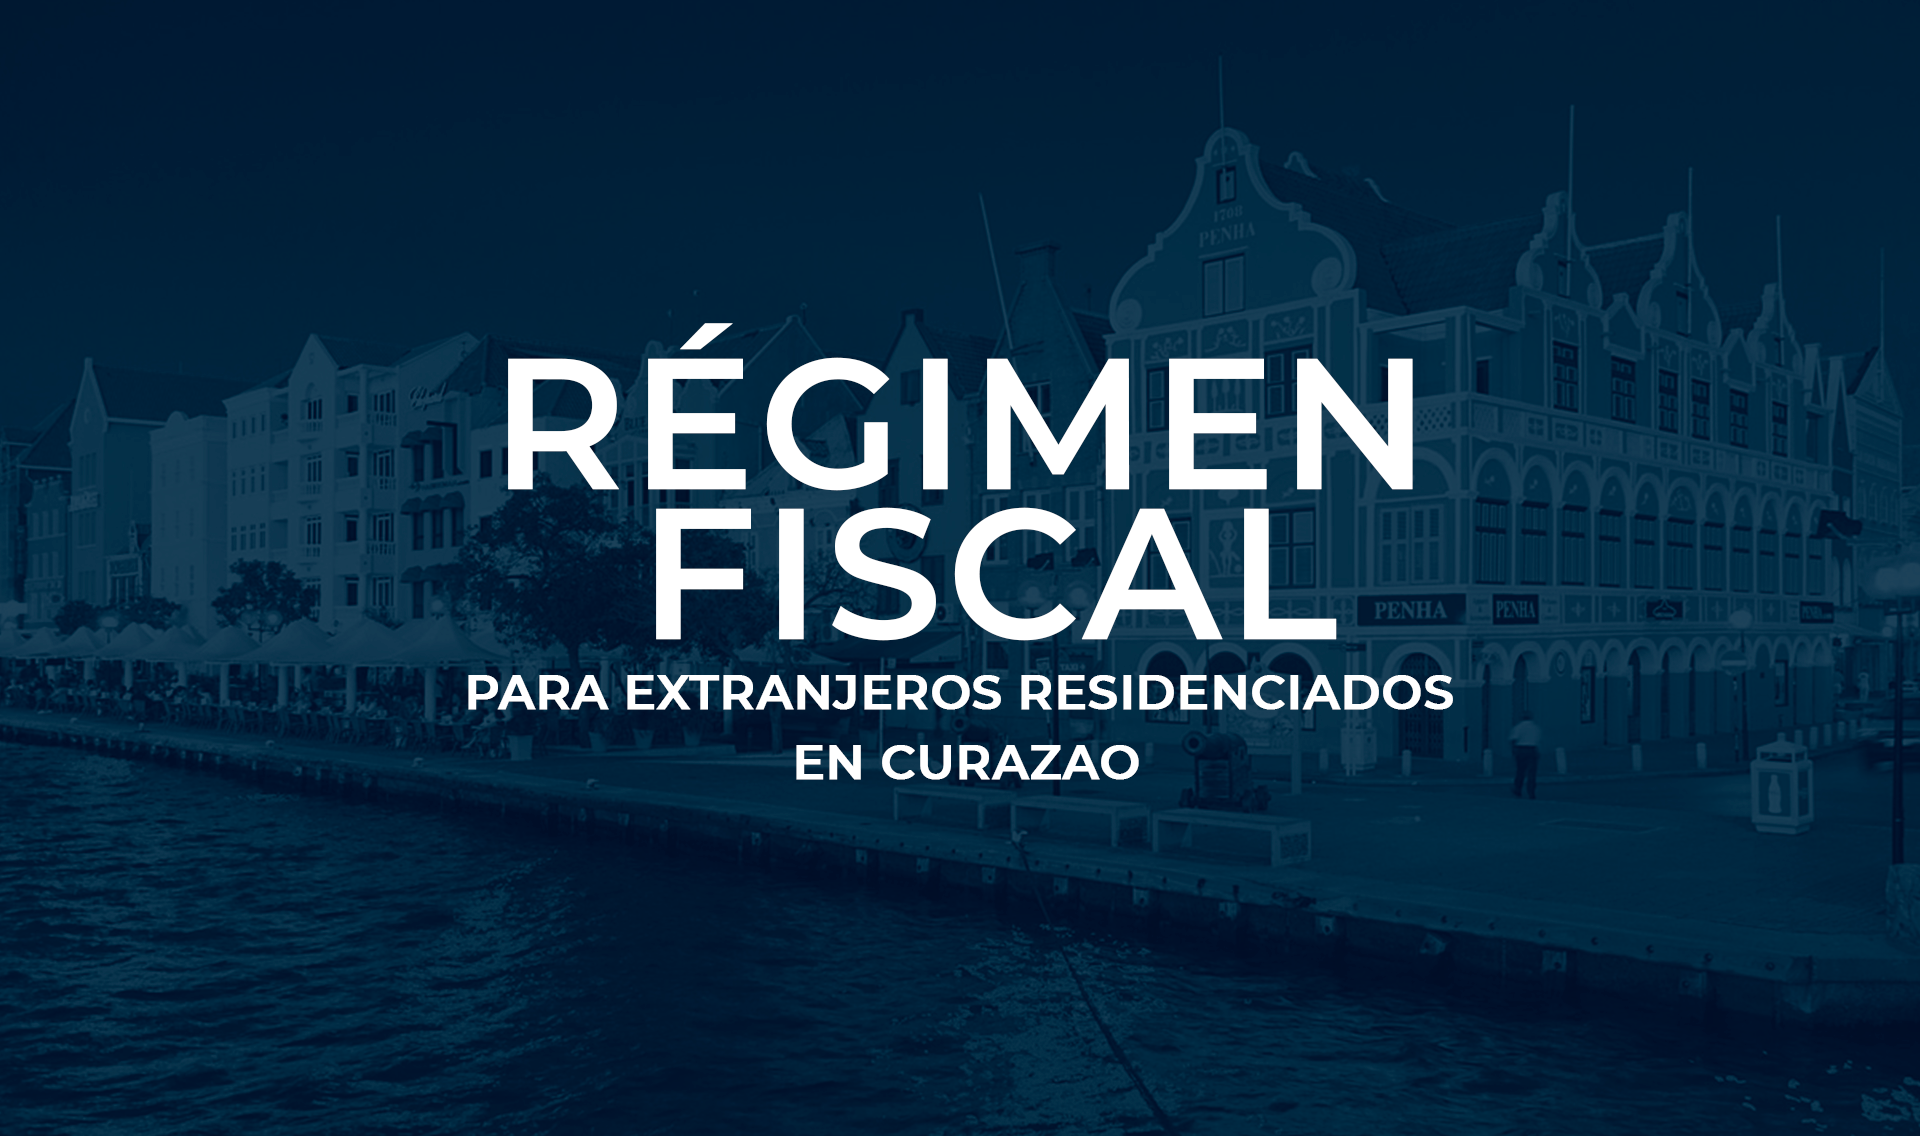 BENEFICIOS FINANCIEROS PARA EXTRANJEROS RÉGIMEN FISCAL